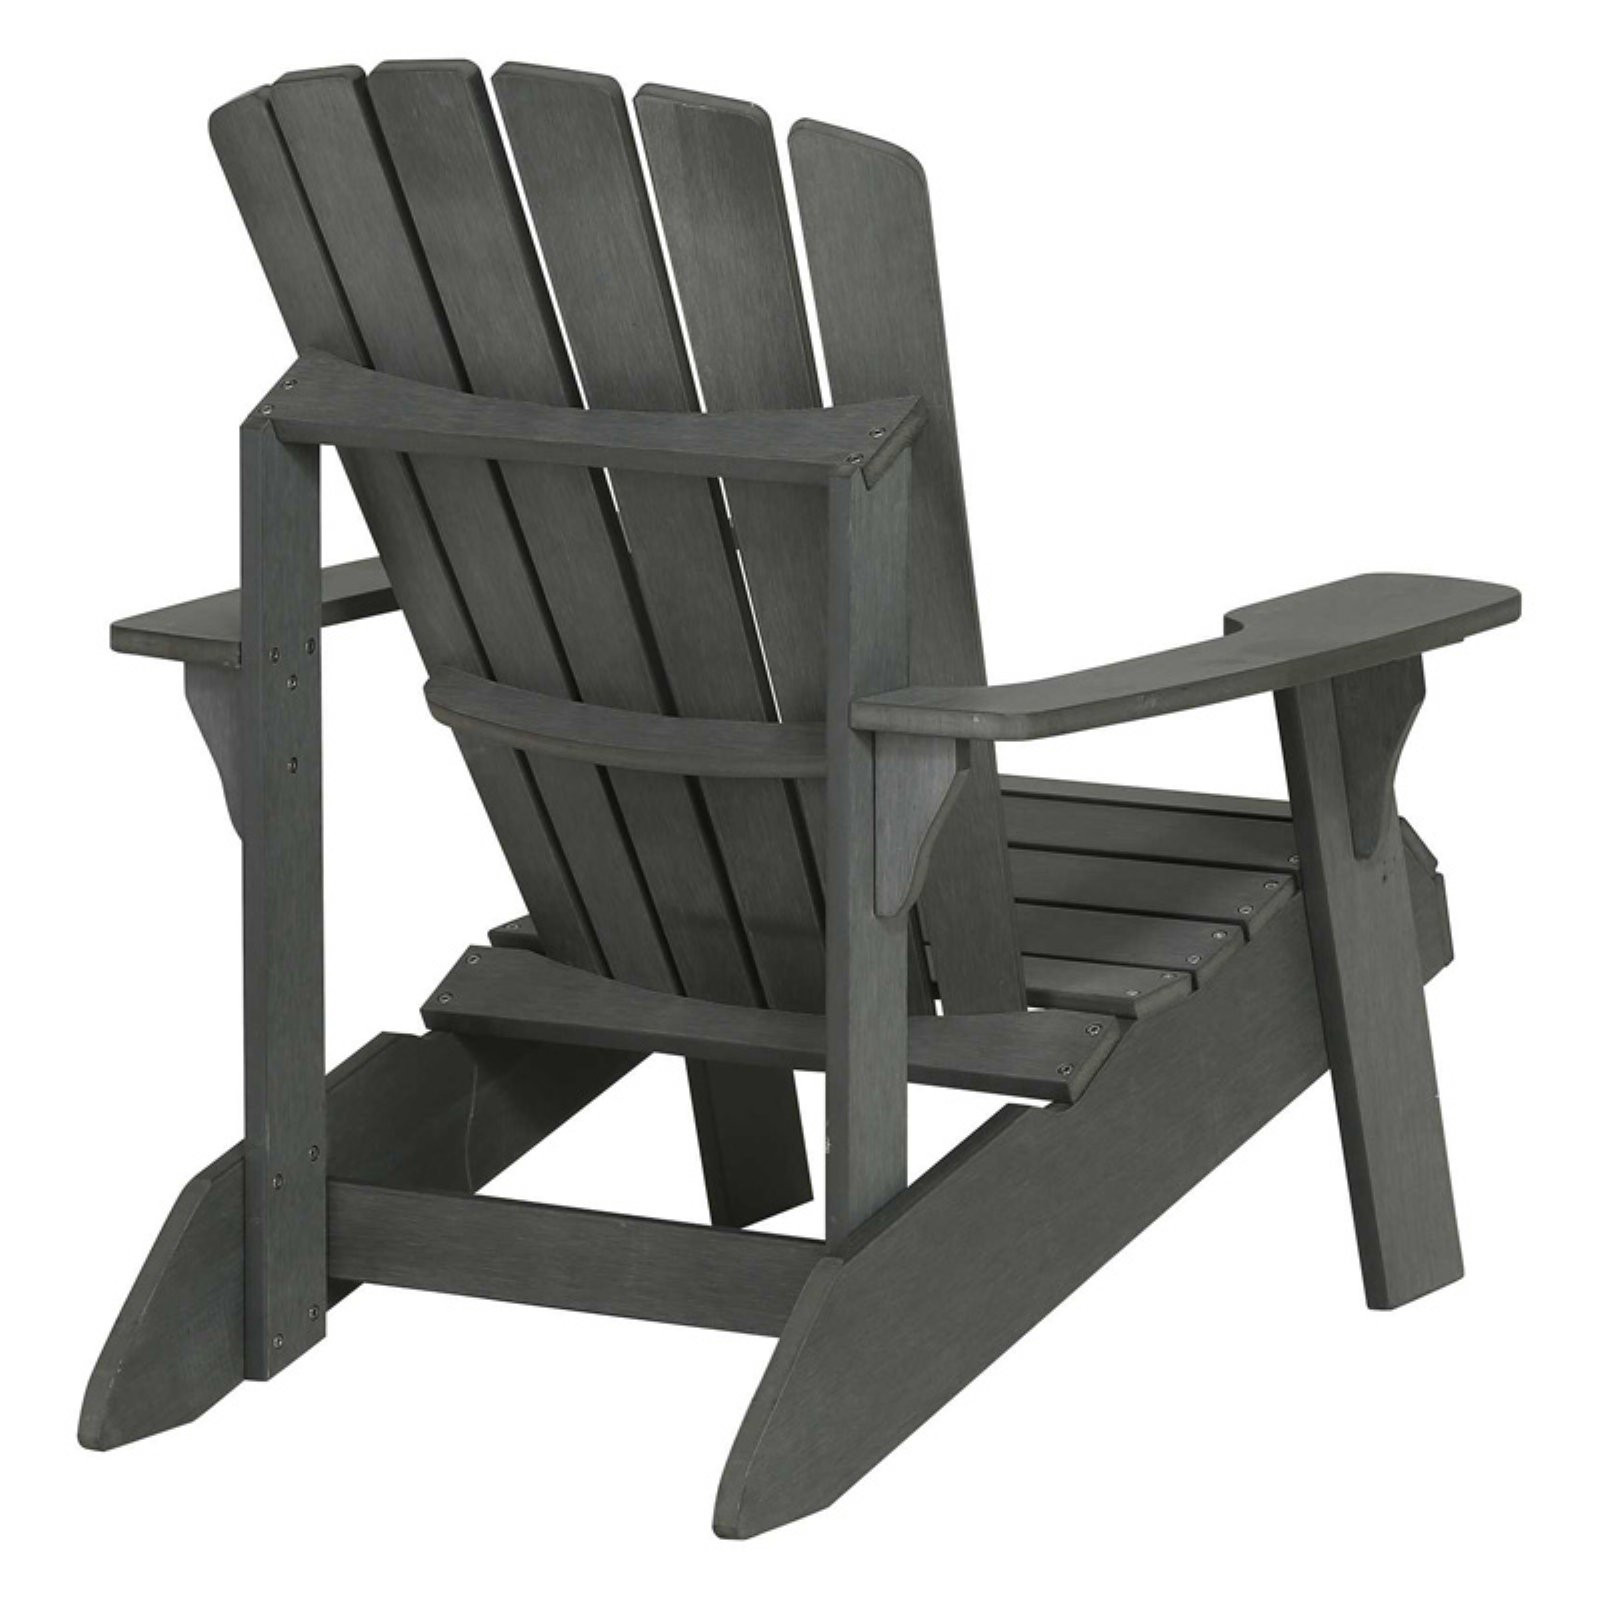 Best ideas about Lifetime Adirondack Chair
. Save or Pin Lifetime Faux Wood Adirondack Chair Now.